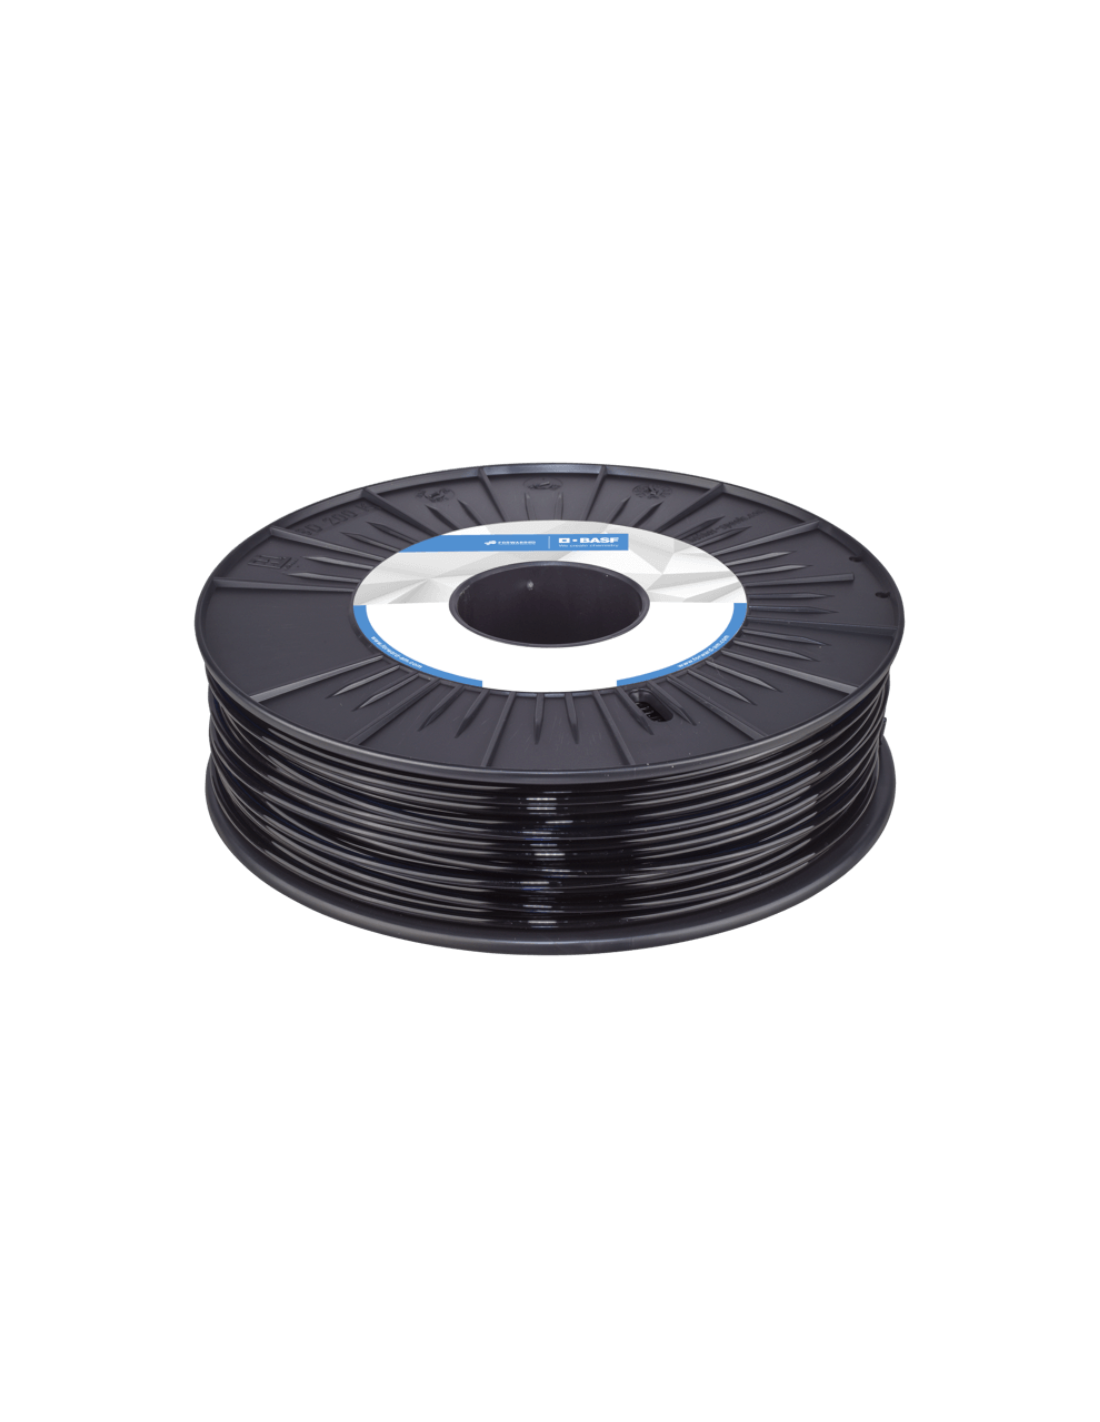 BASF Ultrafuse PLA PRO1 | Filamento para impresión 3D | 2,85 mm (0,75Kg) | Negro